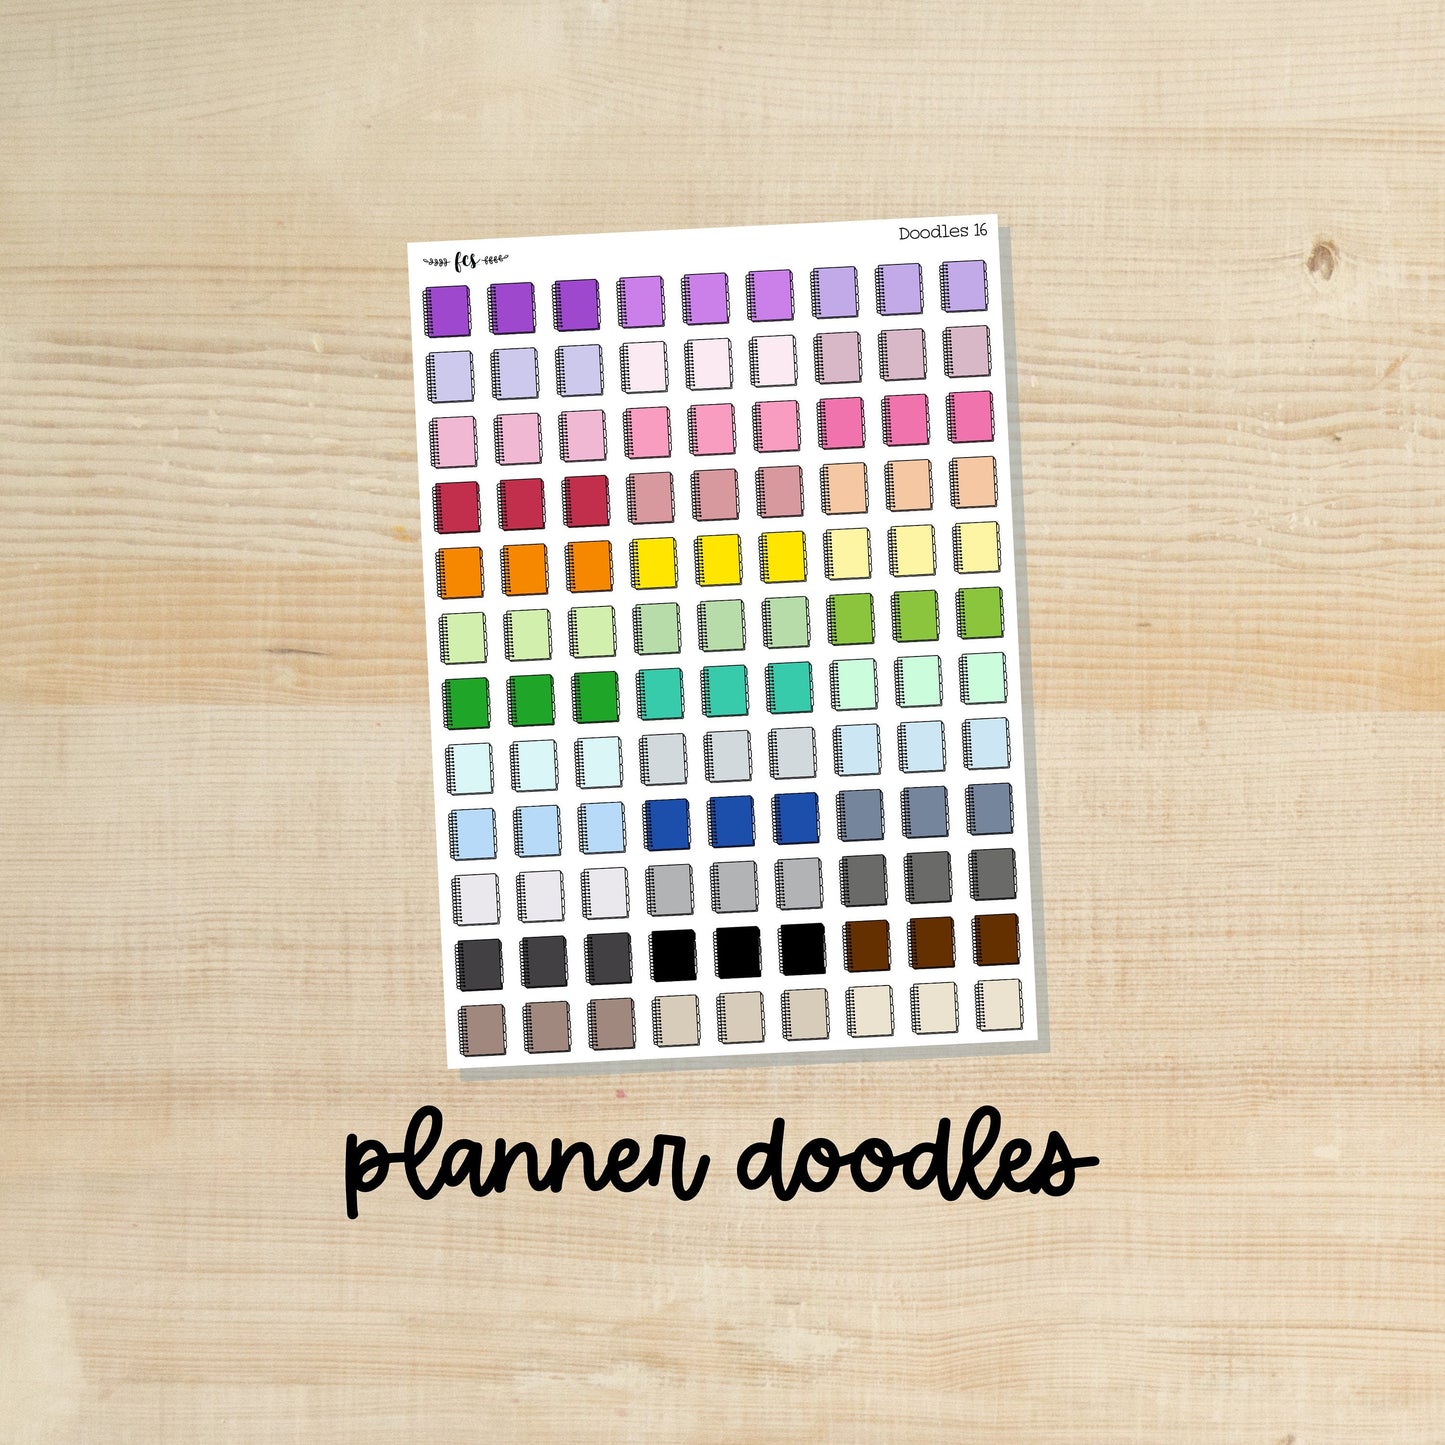 DOODLES-16 || PLANNER doodle planner stickers